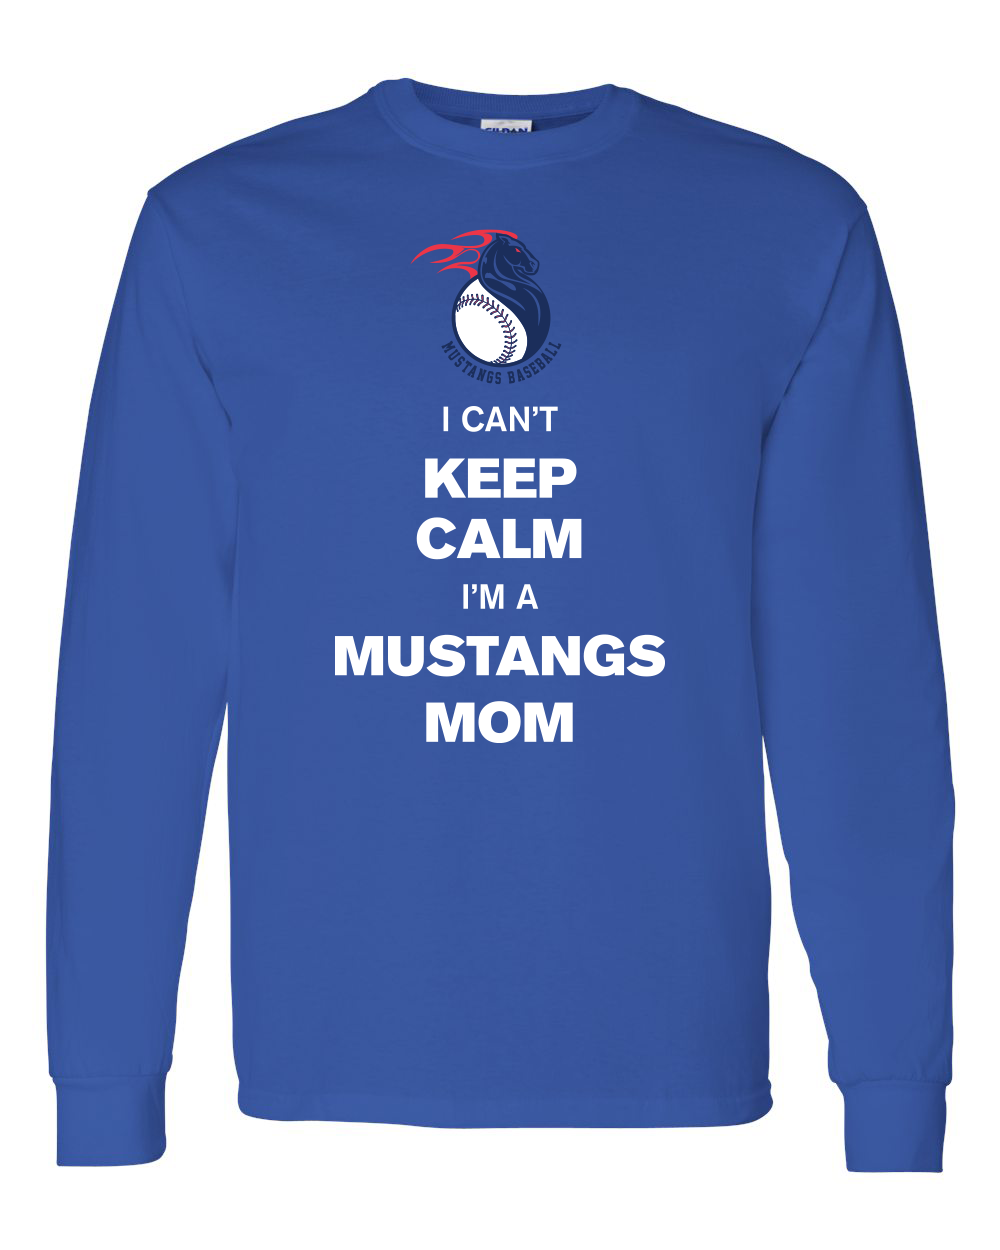 Keep Calm Mustangs Mom Long Sleeve Shirt